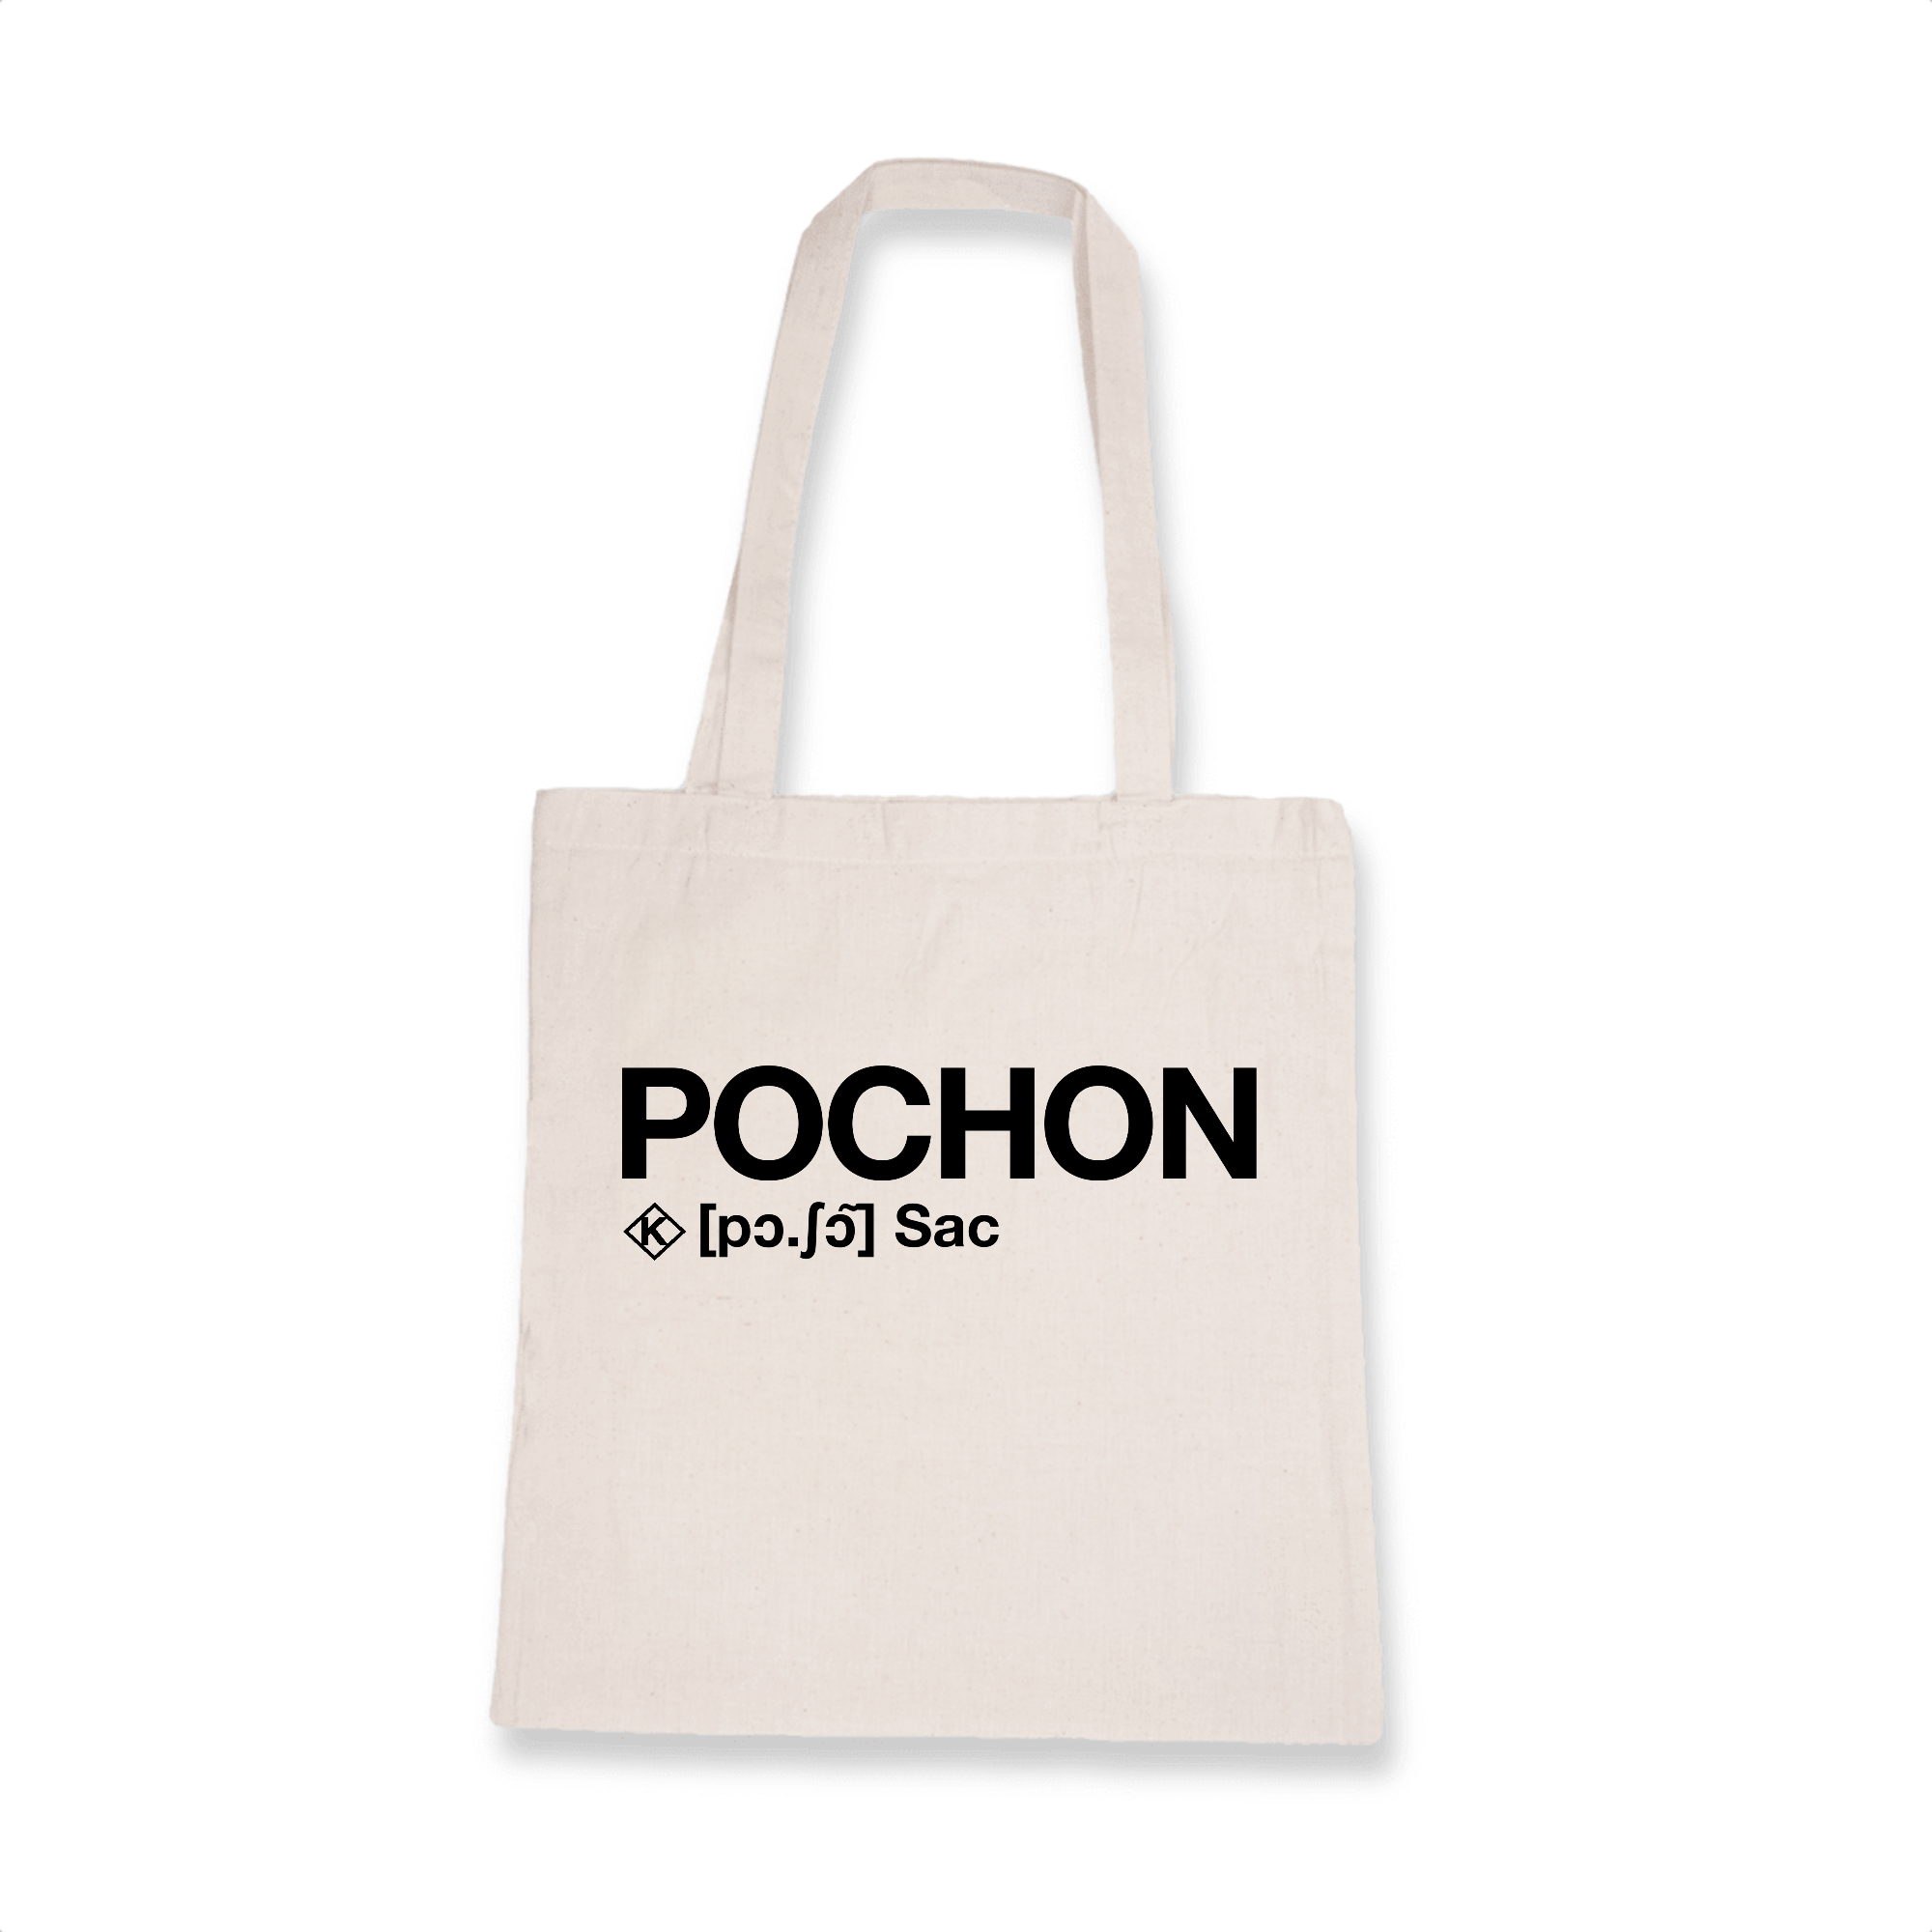 Pochon Totebag (Sac)